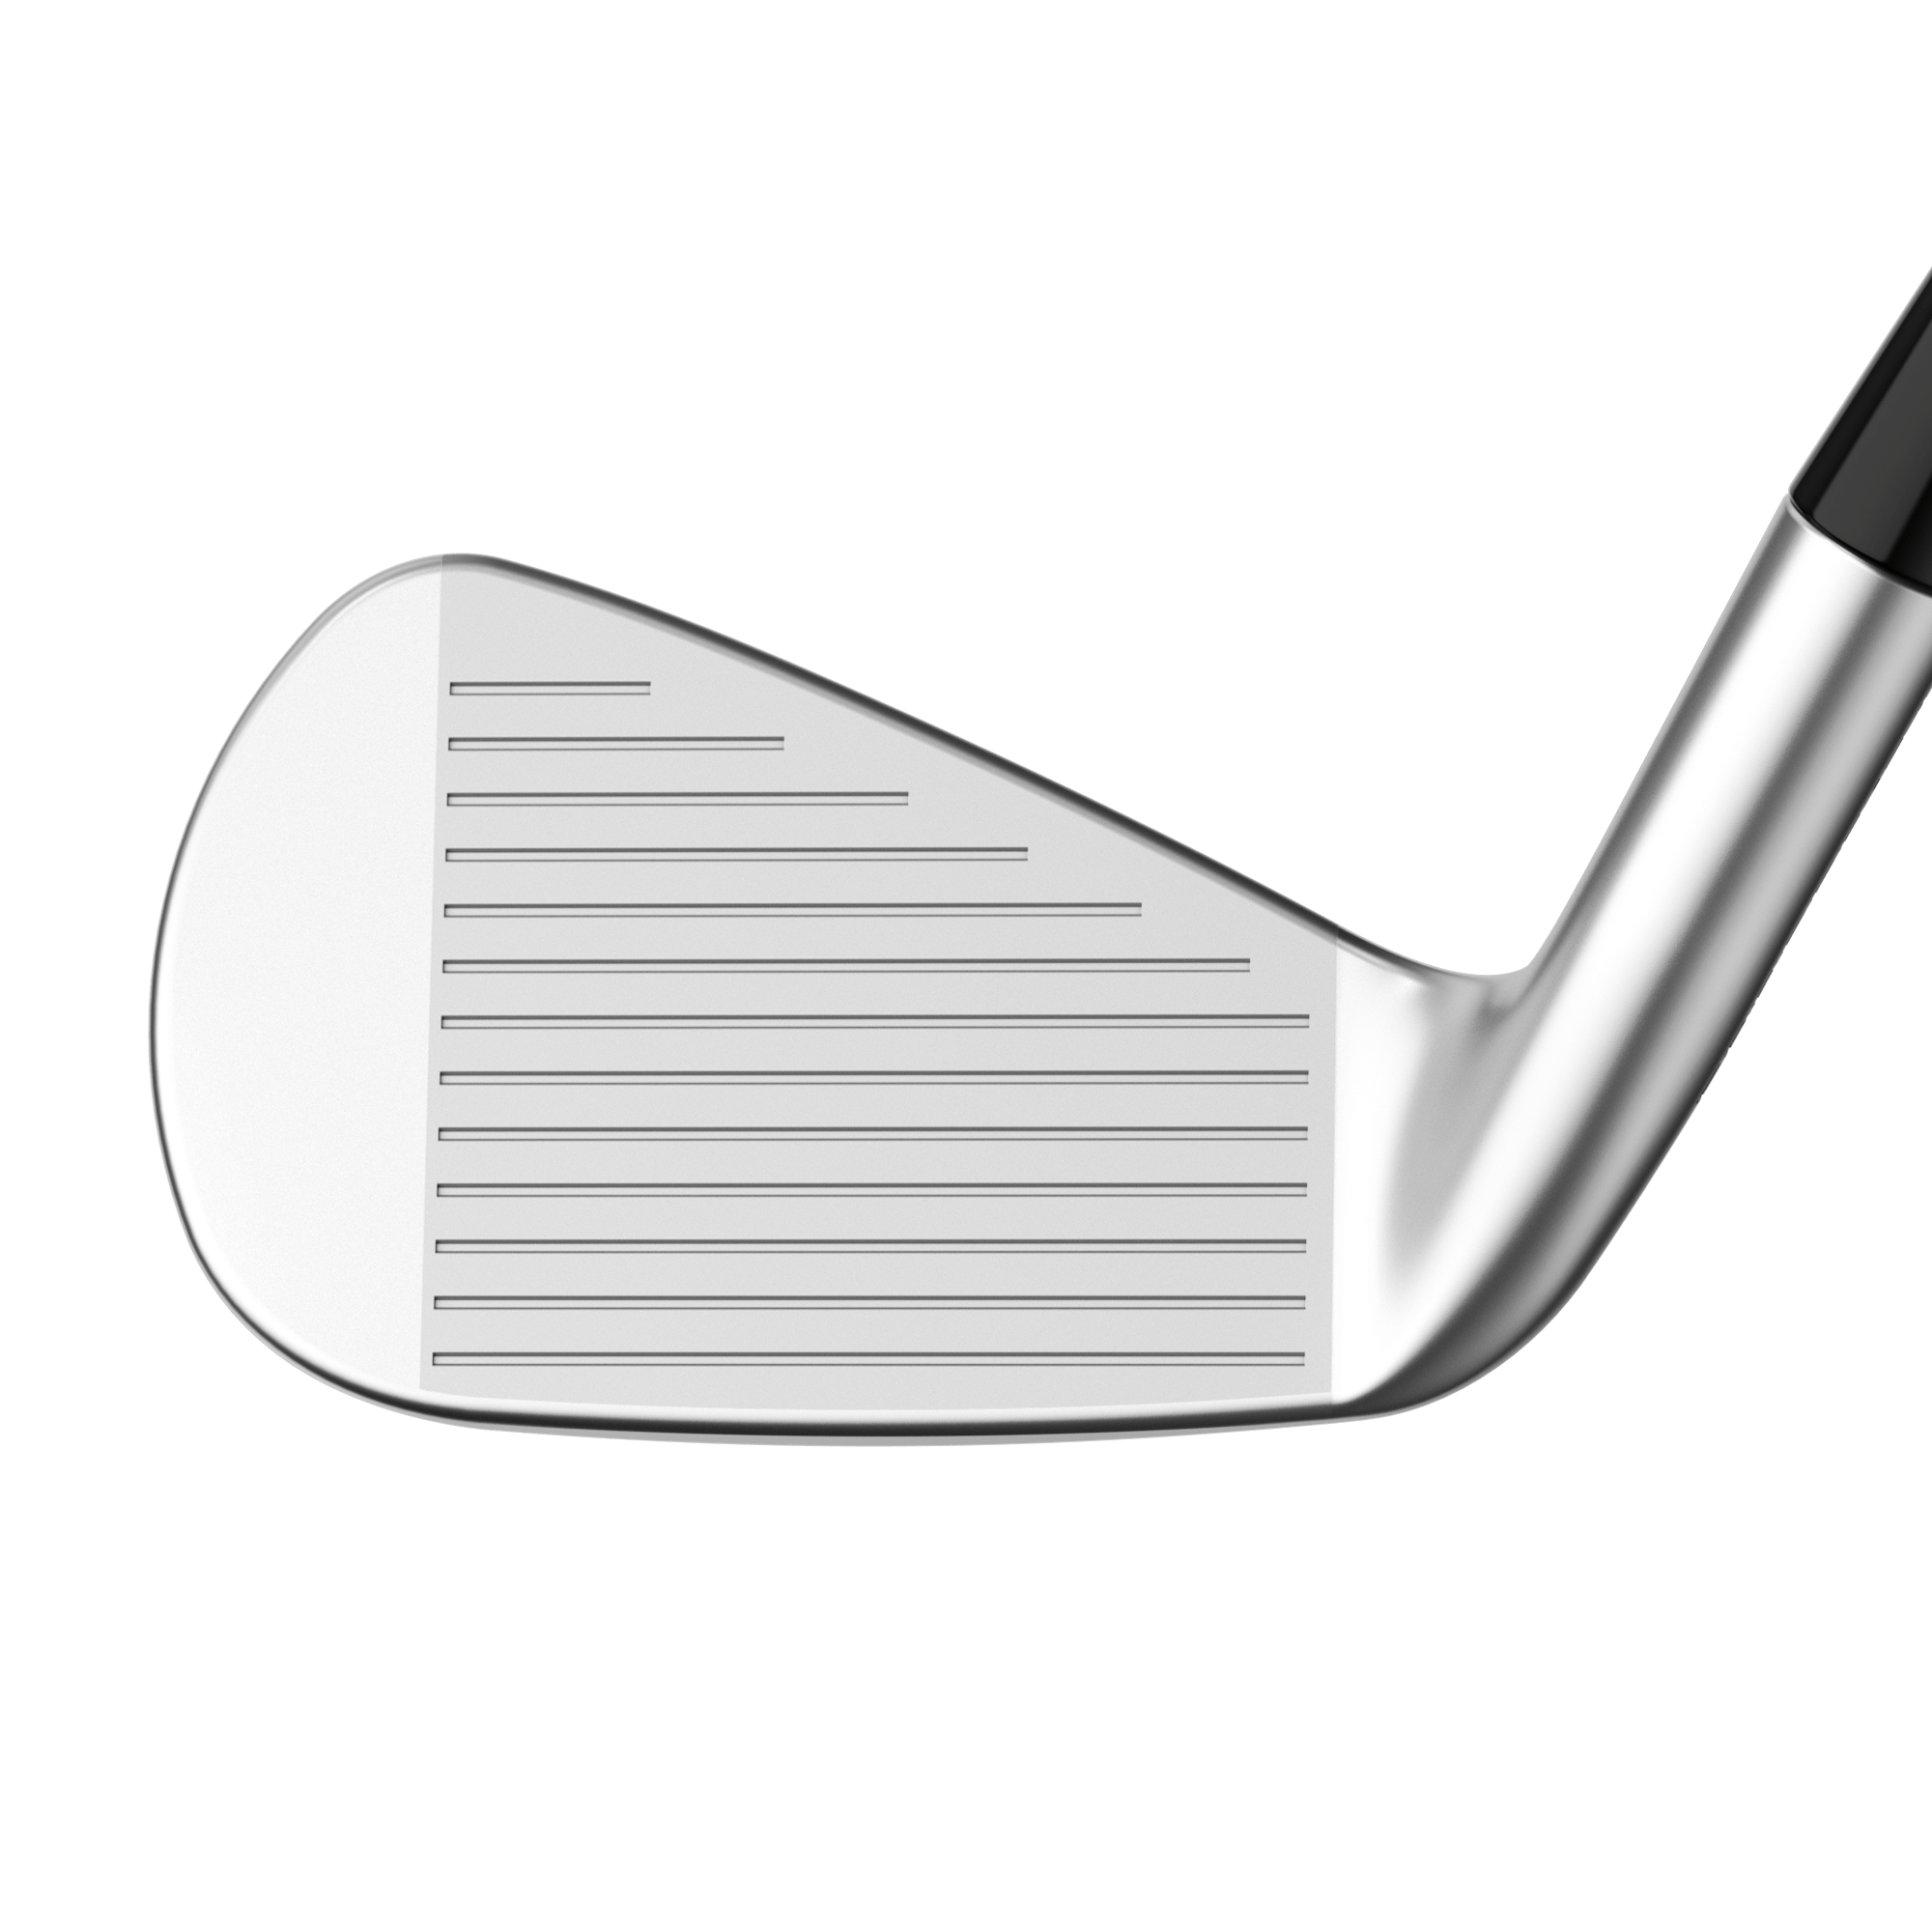 Apex Pro Series Player Iron Set | Callaway Golf